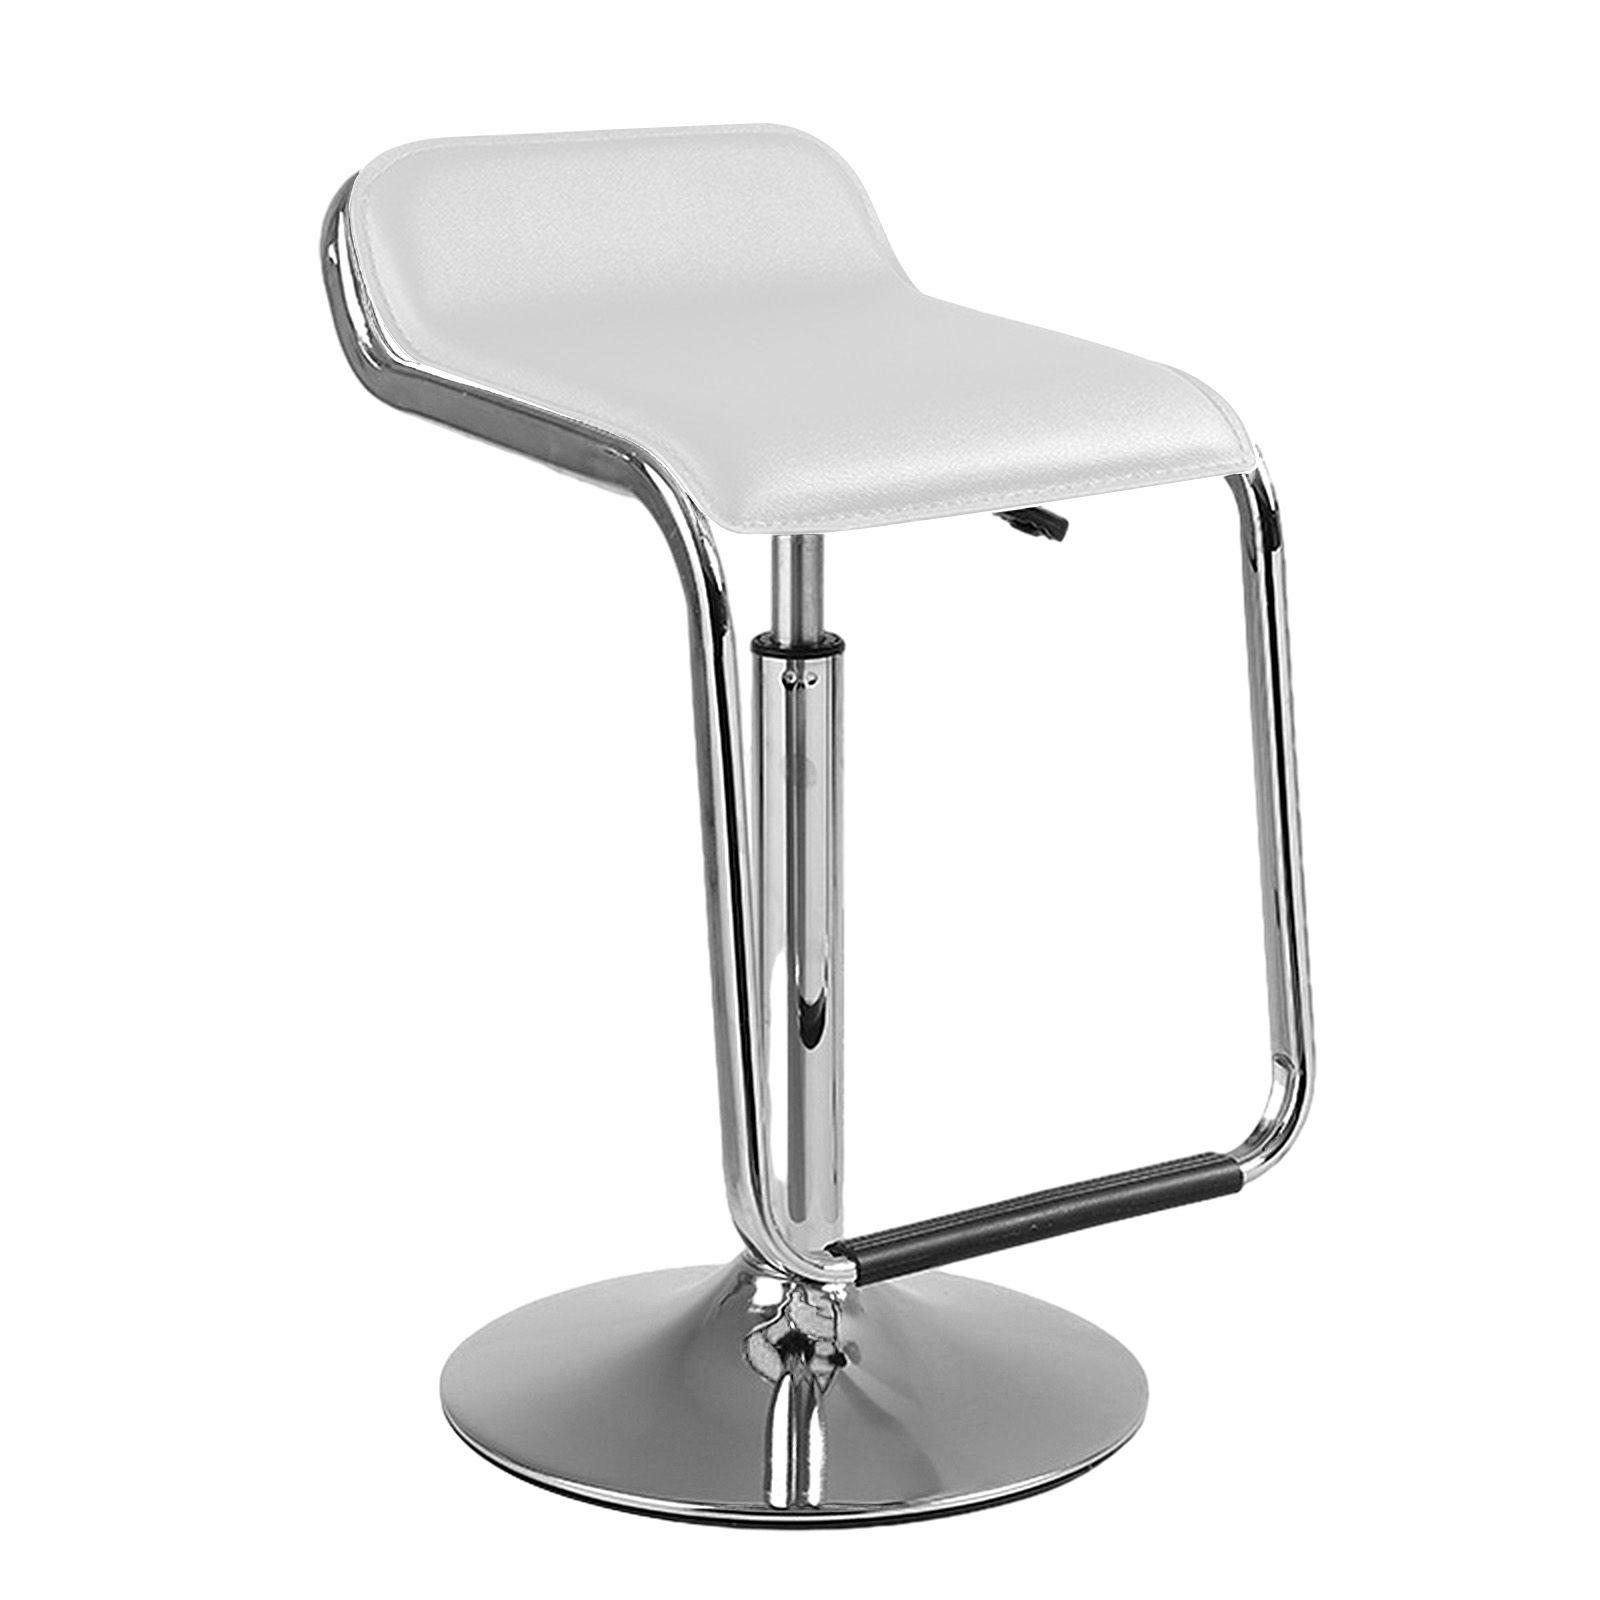 S chair round drag - White